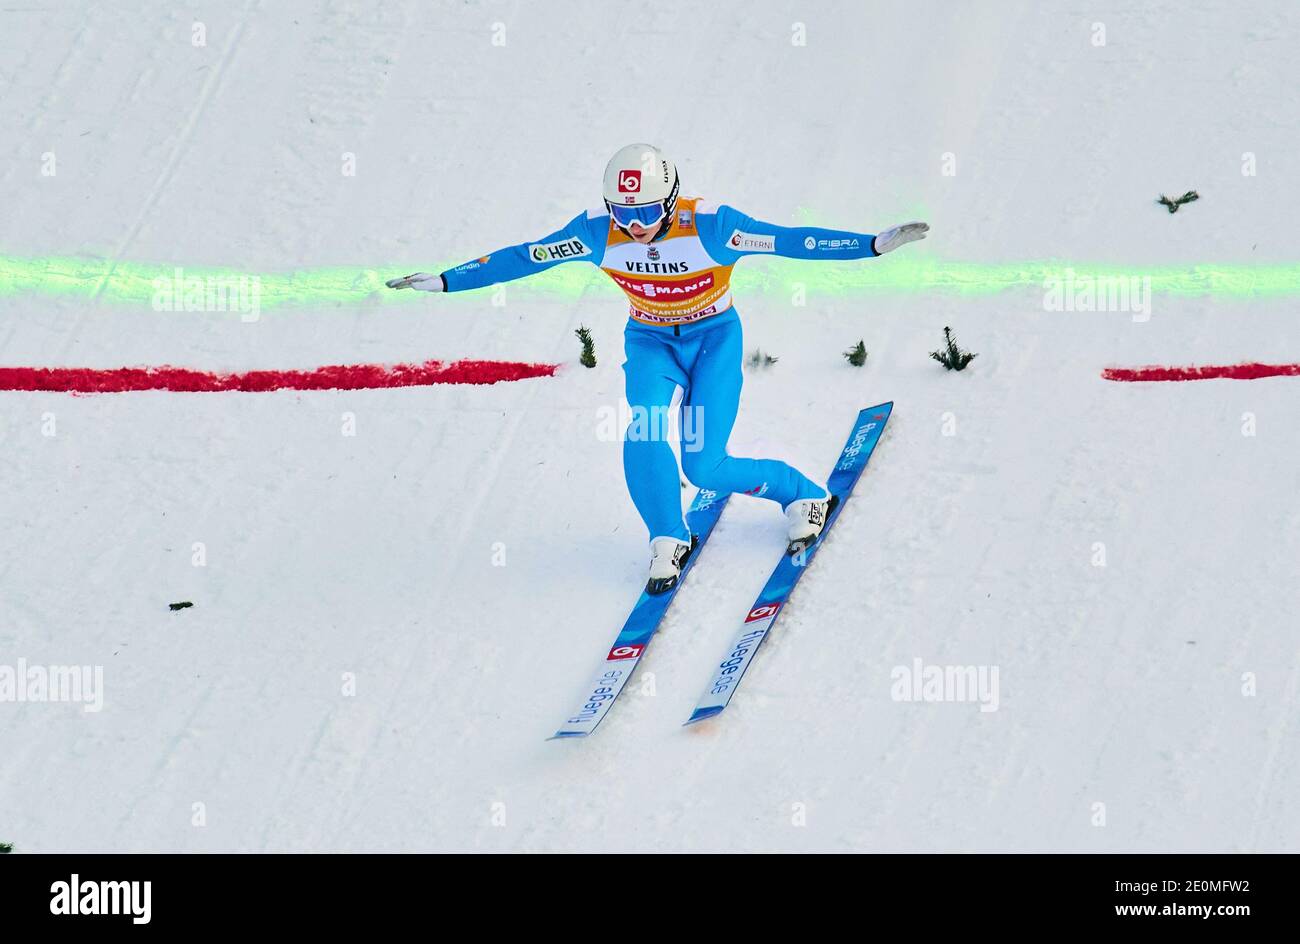 Halvor Egner GRANERUD, NOR in action, landing,  at the Four Hills Tournament Ski Jumping at Olympic Stadium, Grosse Olympiaschanze in Garmisch-Partenkirchen, Bavaria, Germany, January 01, 2021.  © Peter Schatz / Alamy Live News Stock Photo